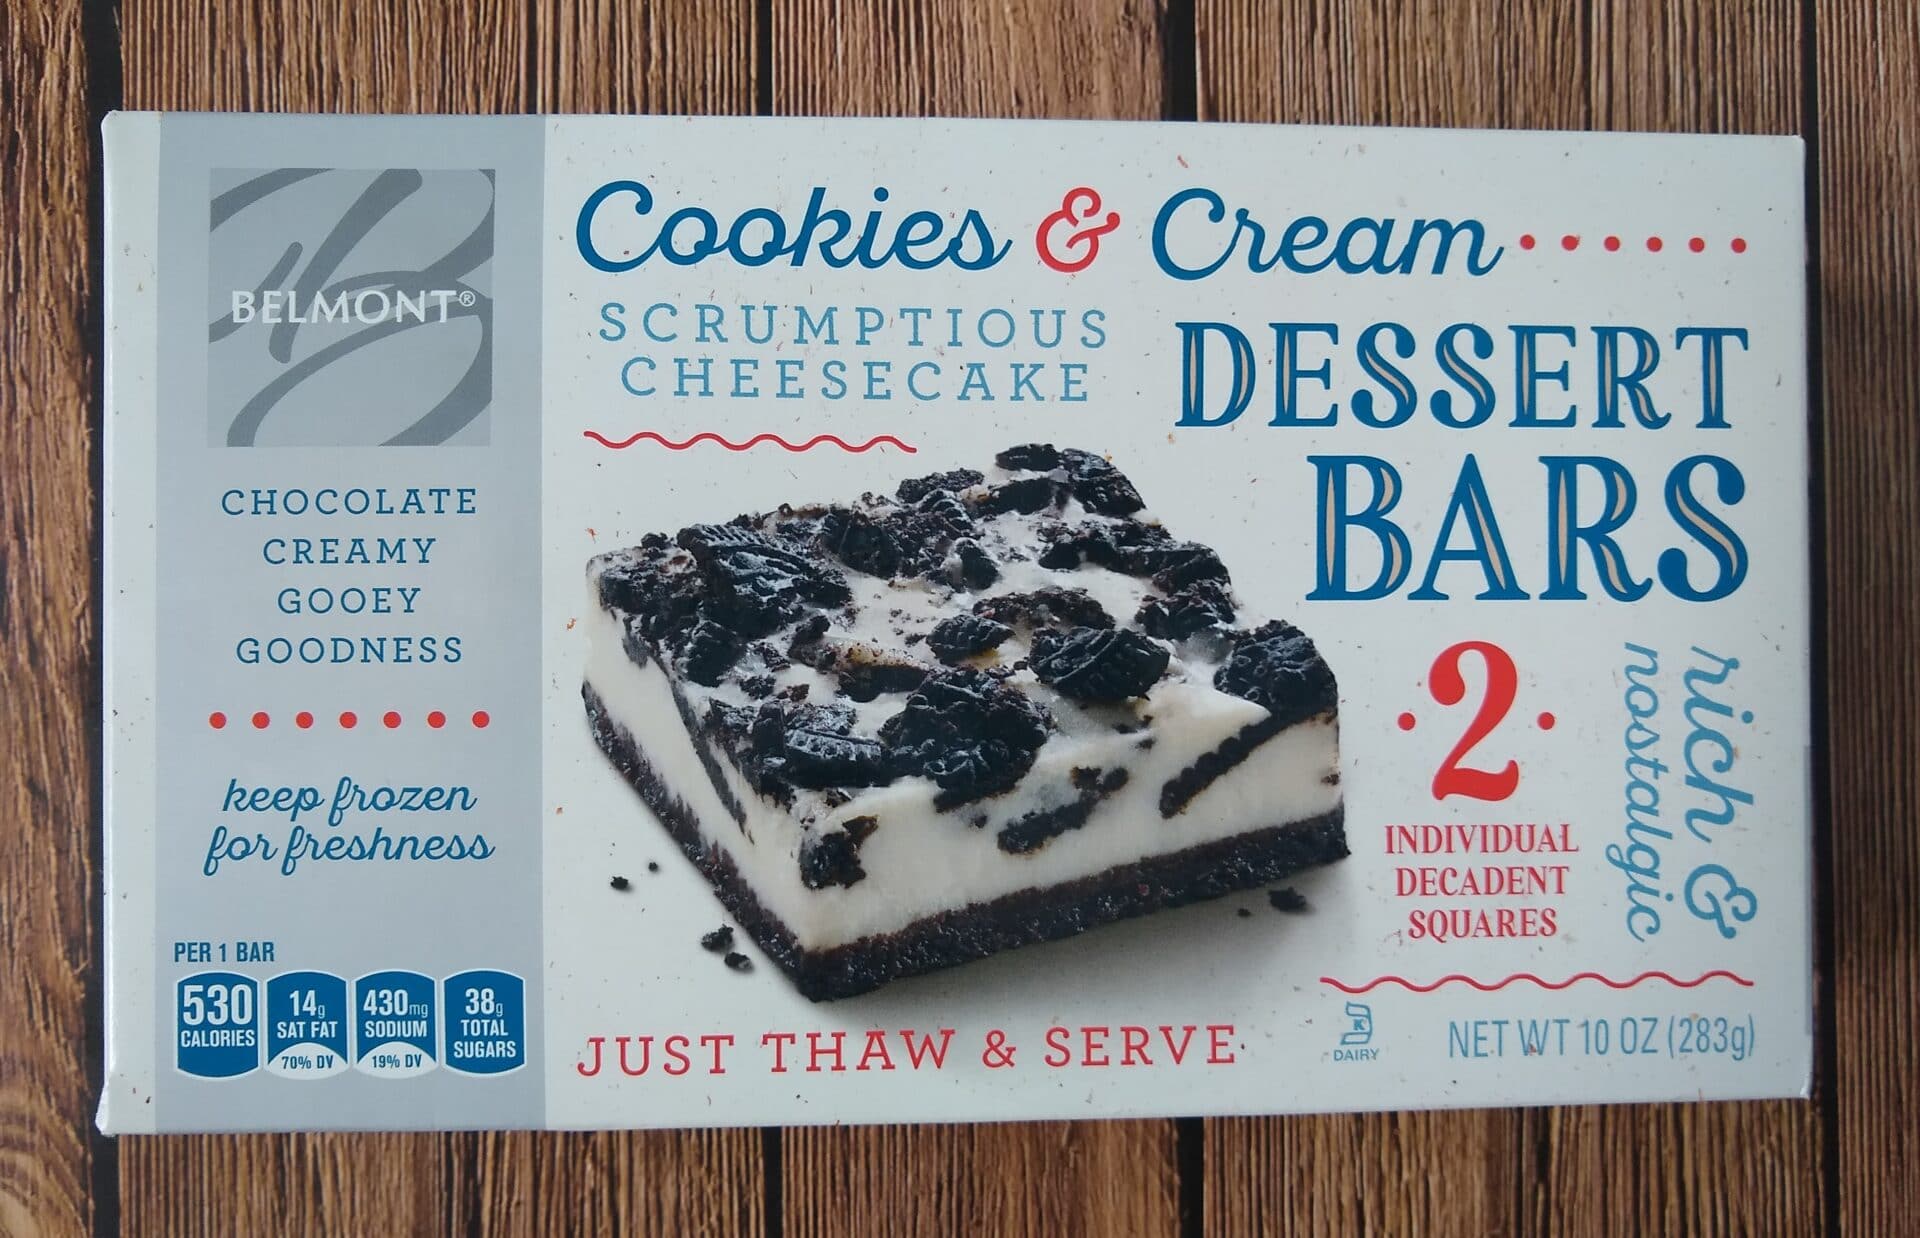 Belmont Cookies and Cream Scrumptious Cheesecake Dessert Bars